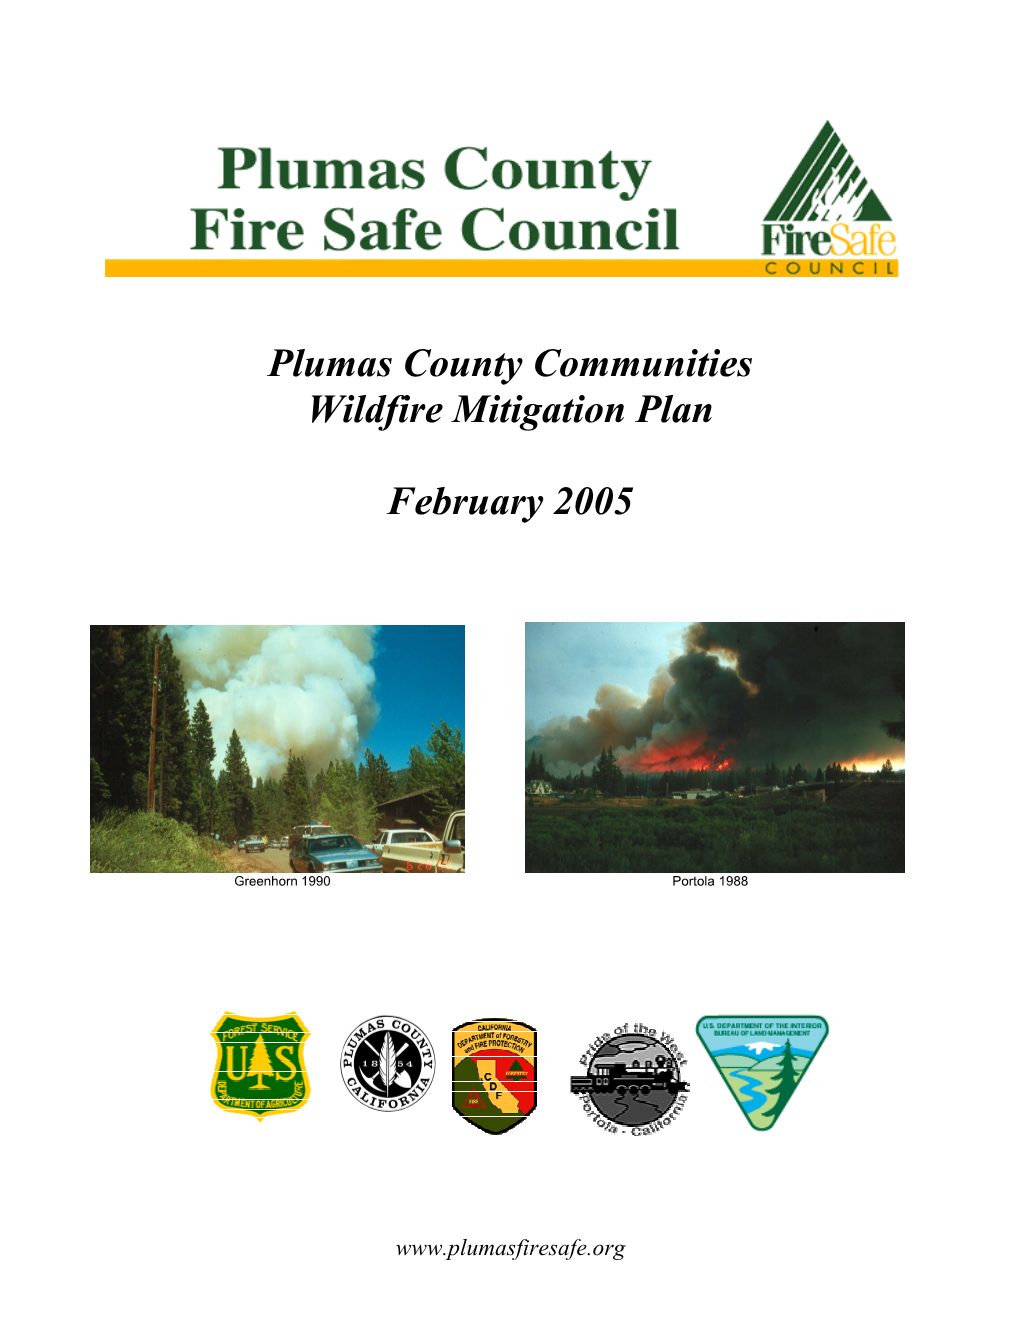 Plumas County Communities Wildfire Mitigation Plan February 2005